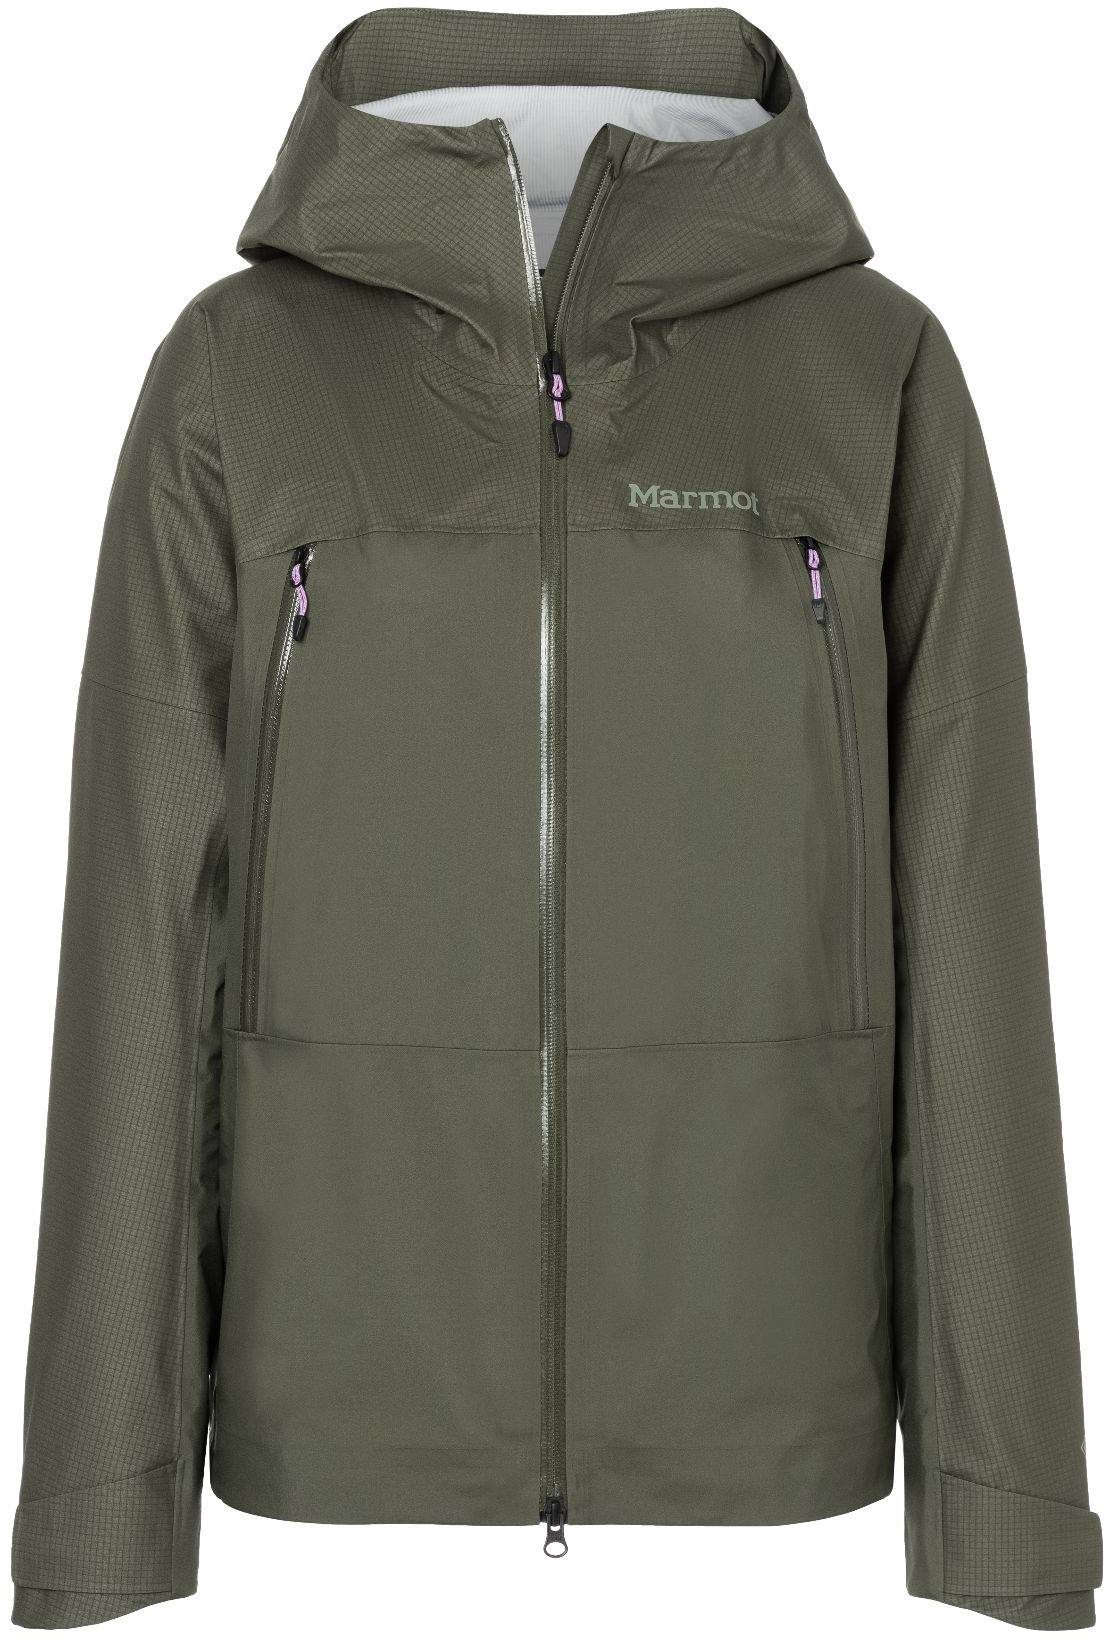 Marmot Women’s Mitre Peak Jacket Nori L